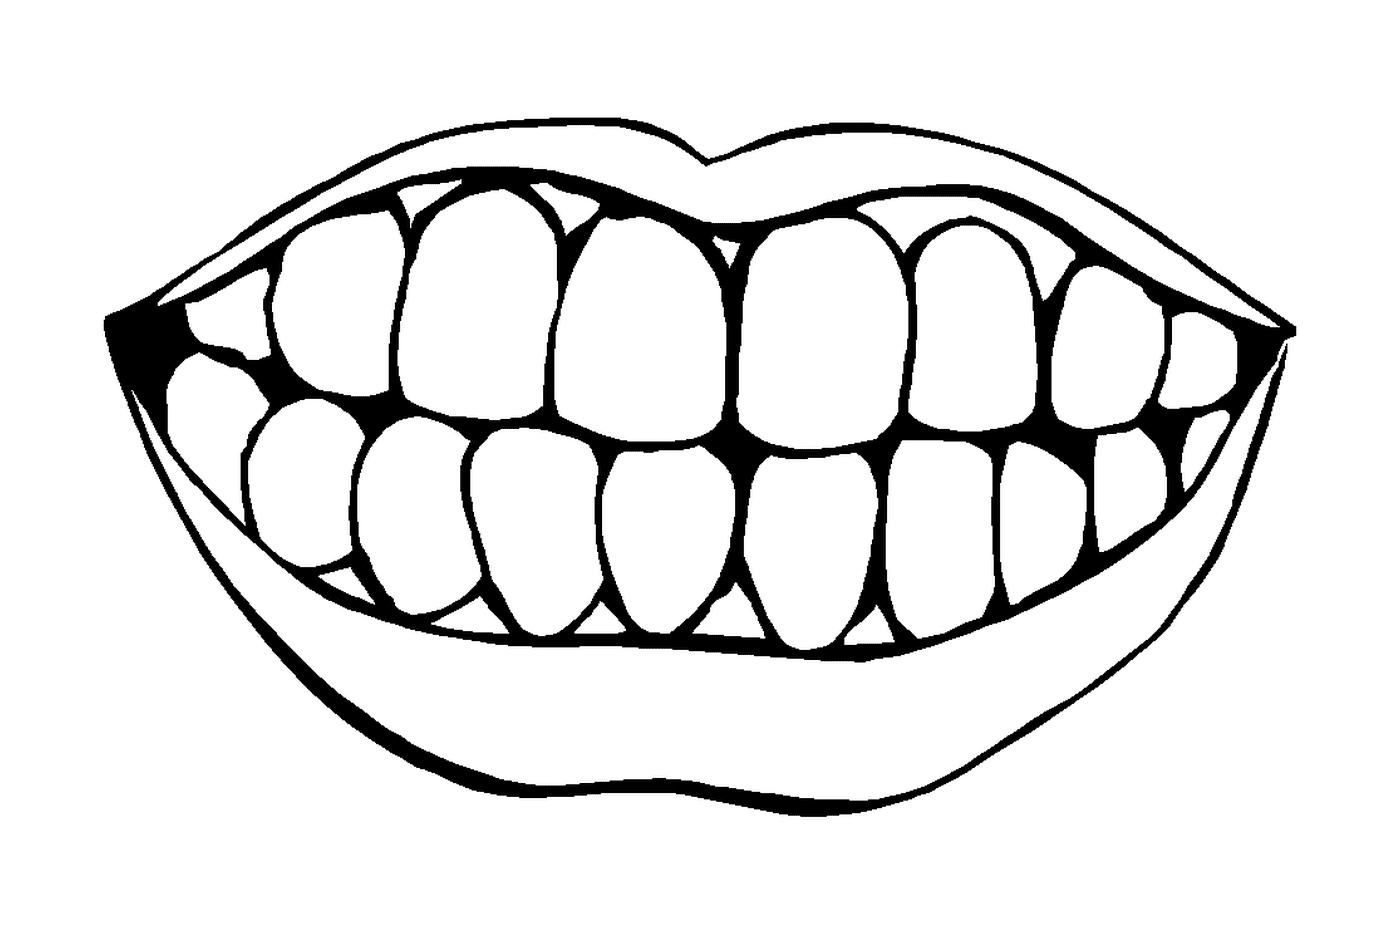  Sorridi e denti 